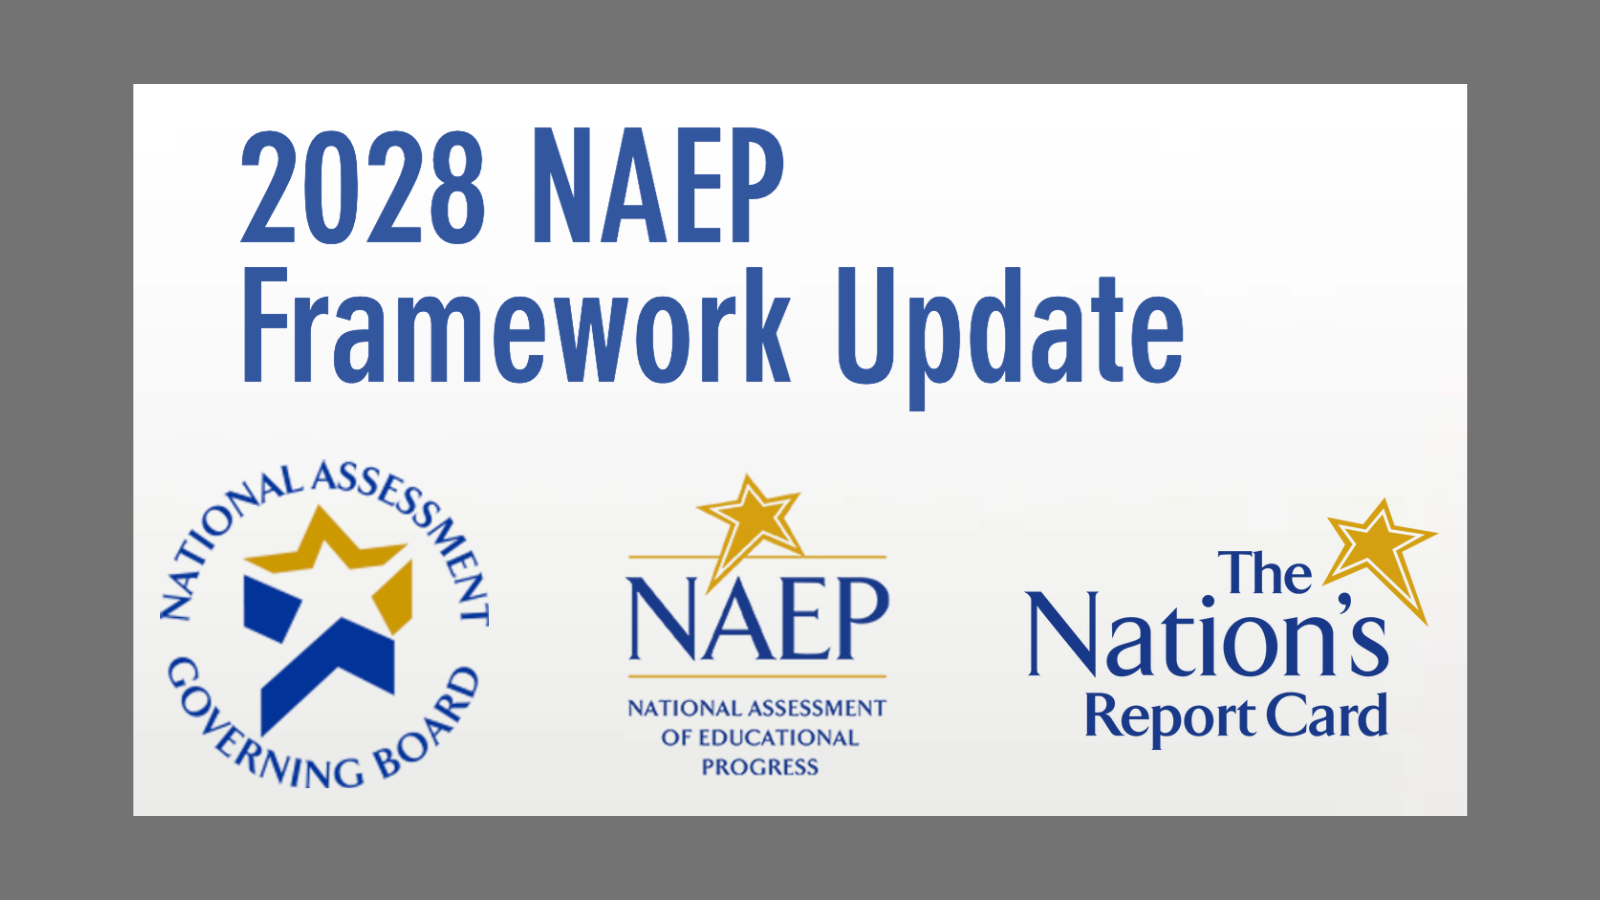 2028 NAEP Framework Update, NAGB logo, NAEP logo, The Nation's Report Card logo